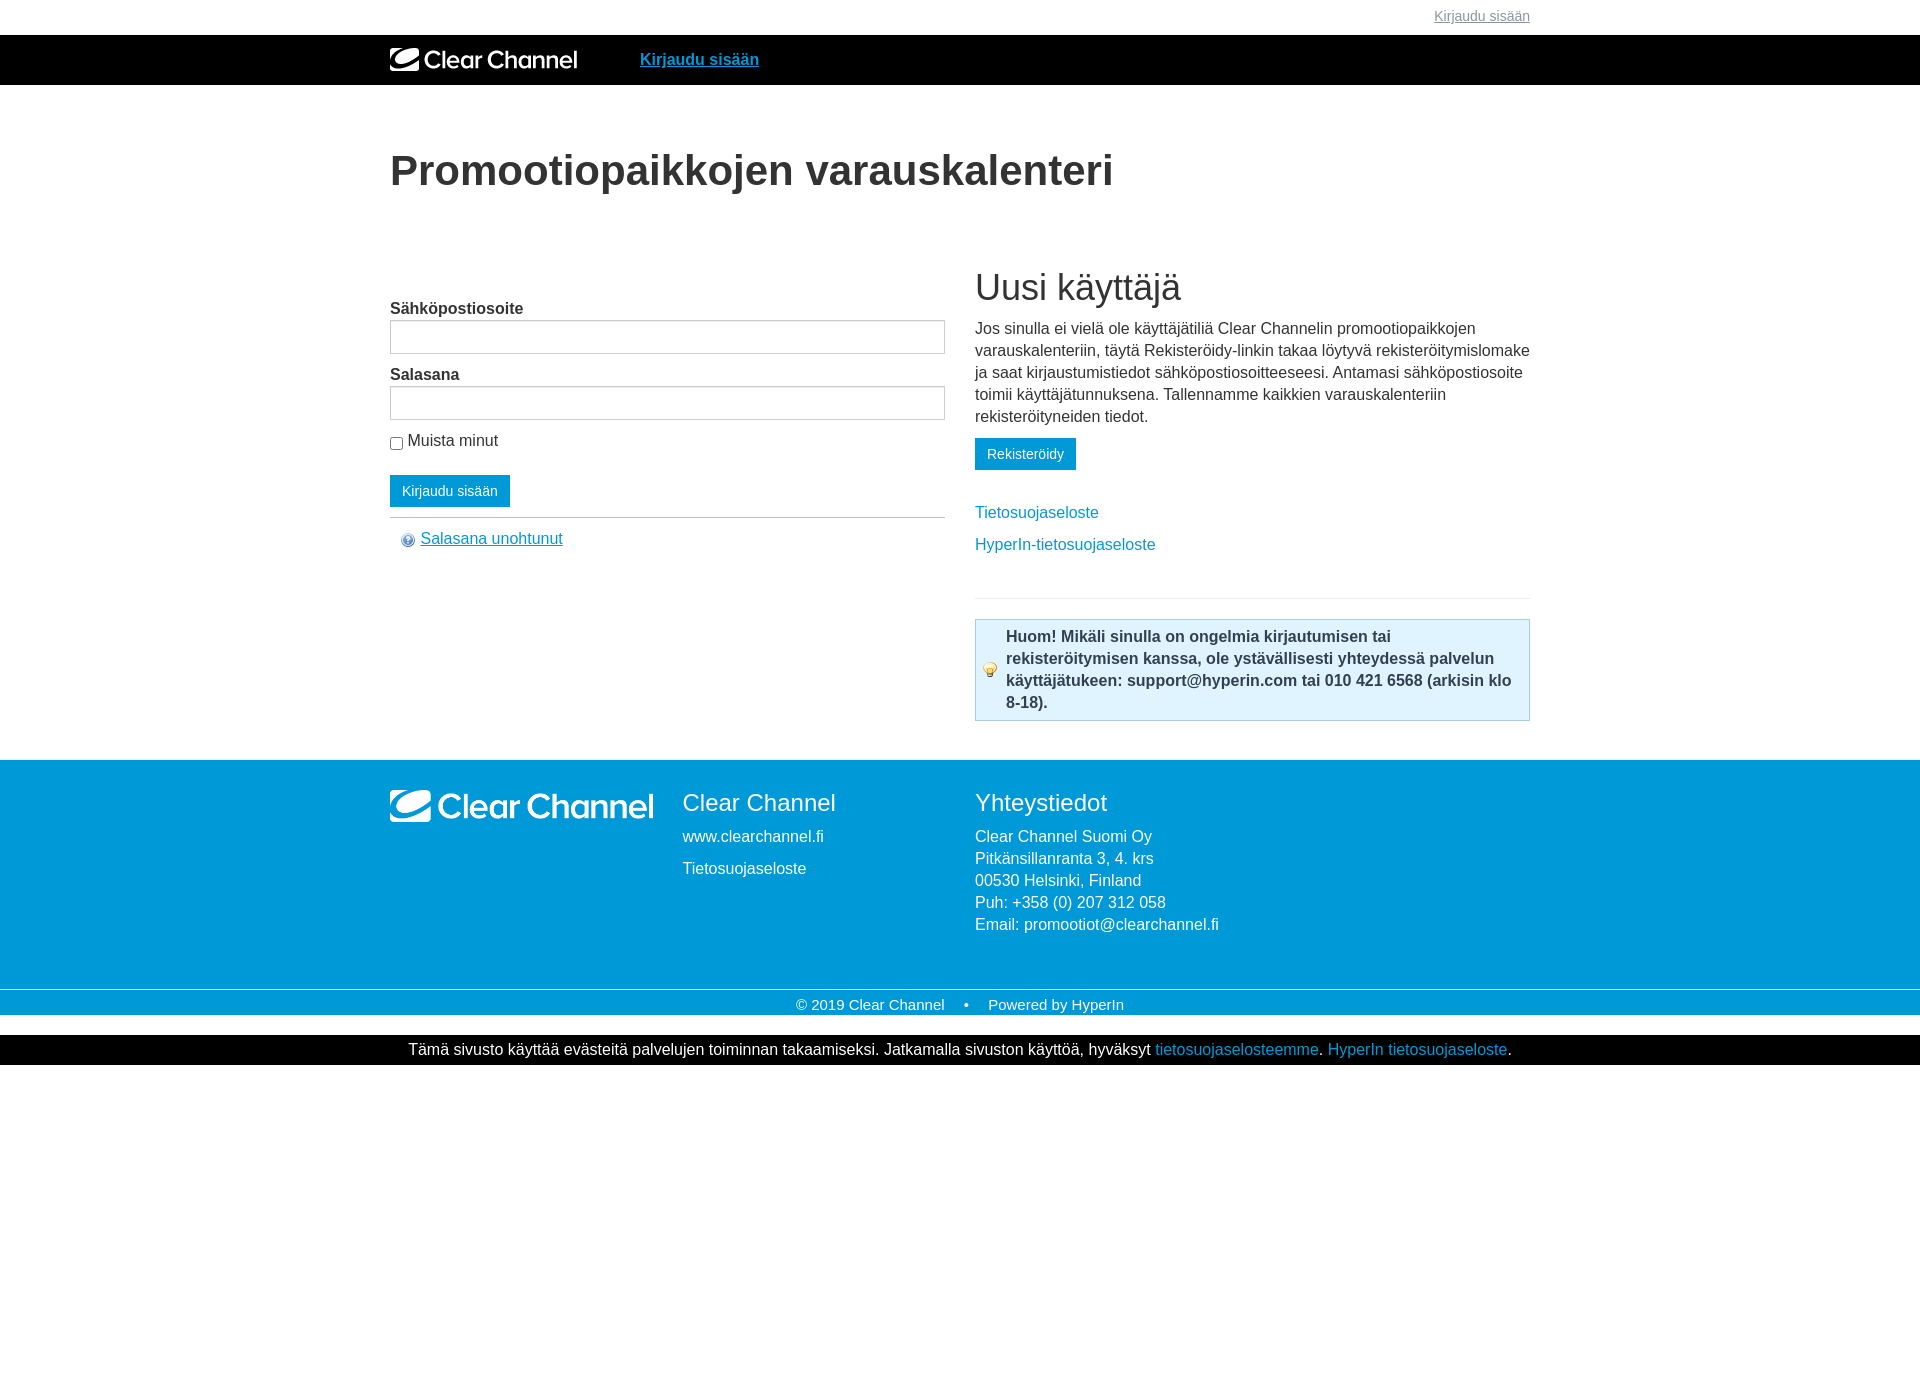 Screenshot for promootiopaikka.fi